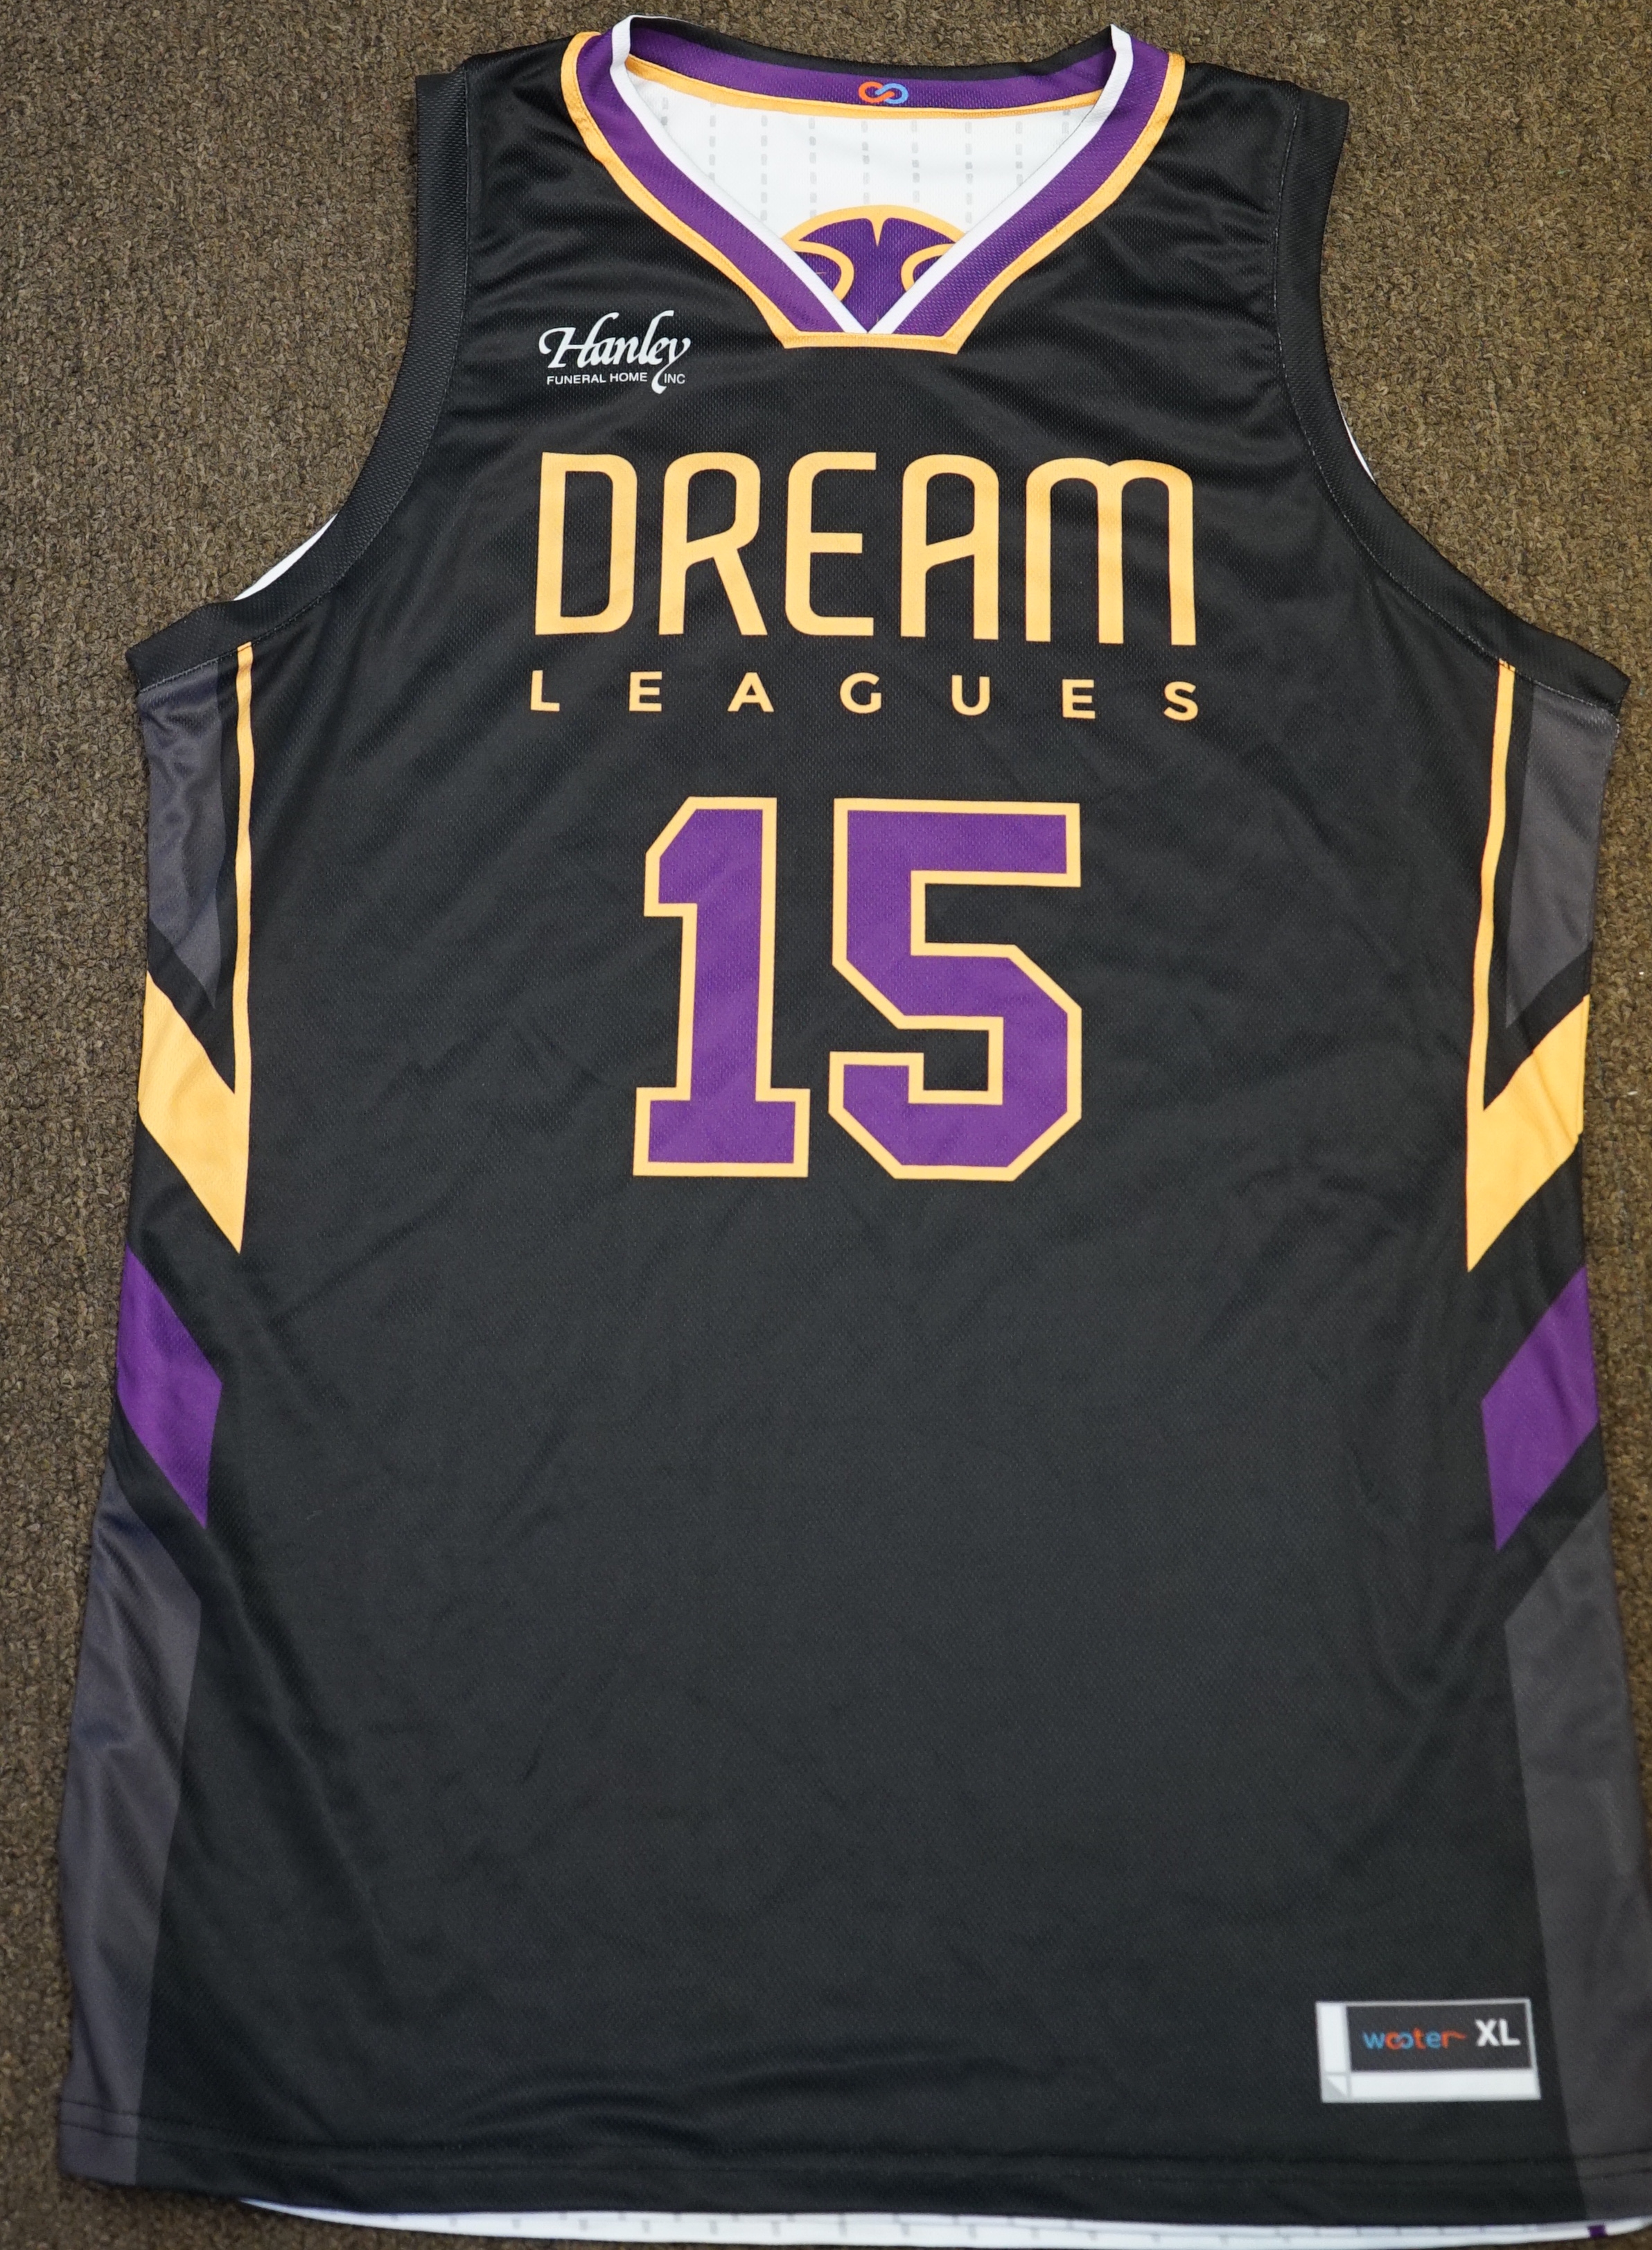 DREAM LEAGUES White Purple Black and Yellow Basketball Uniforms, Jerseys